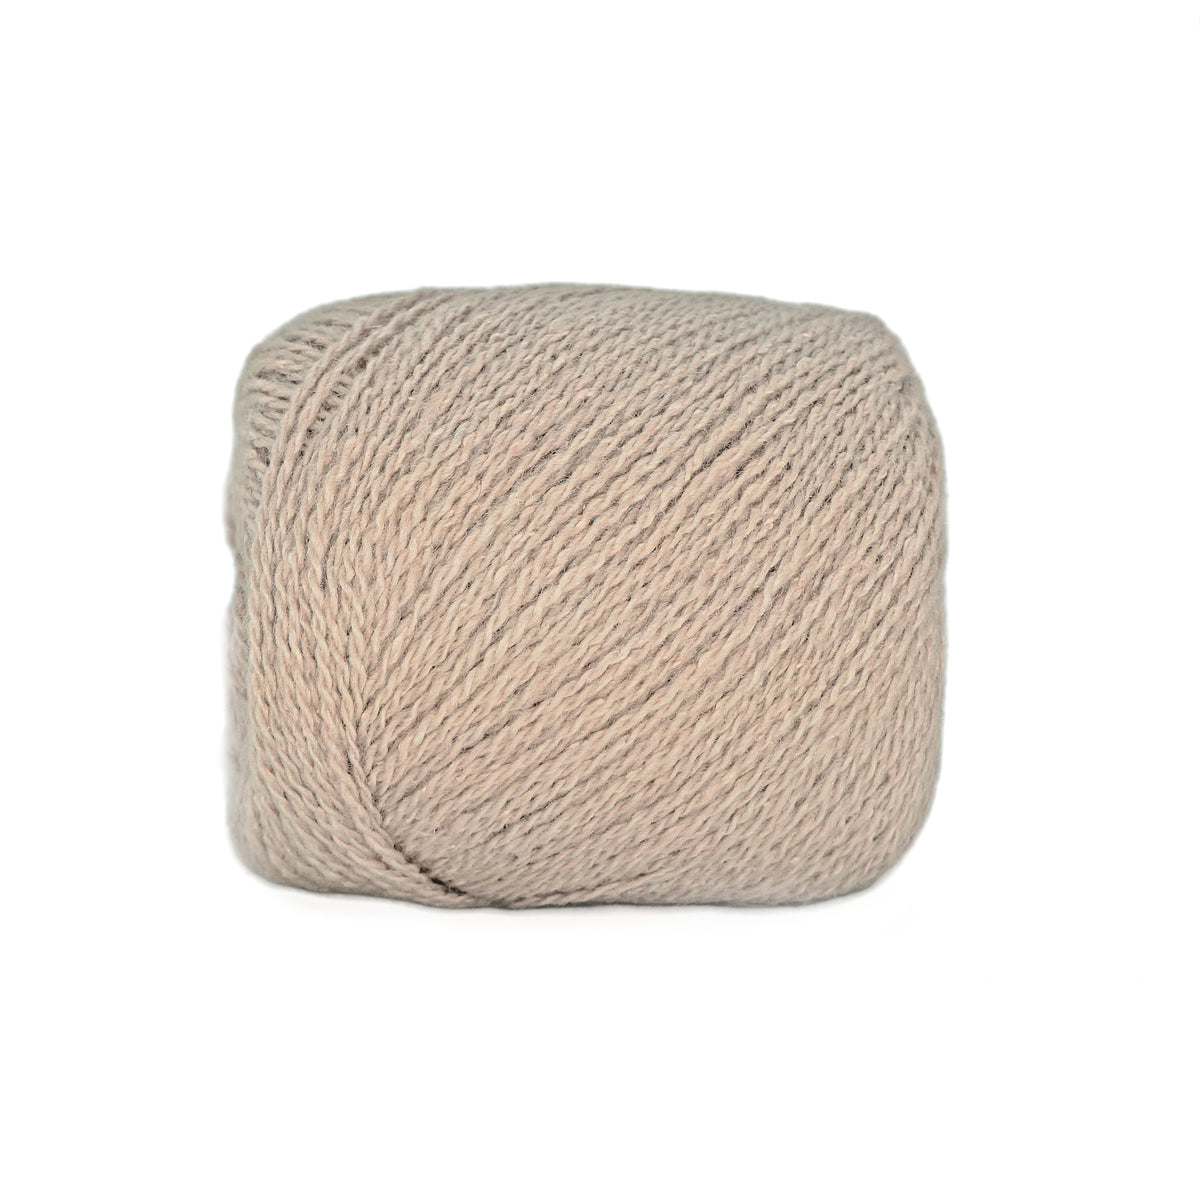  Sonett Organic Wool Care for Restoring Wool and Silk